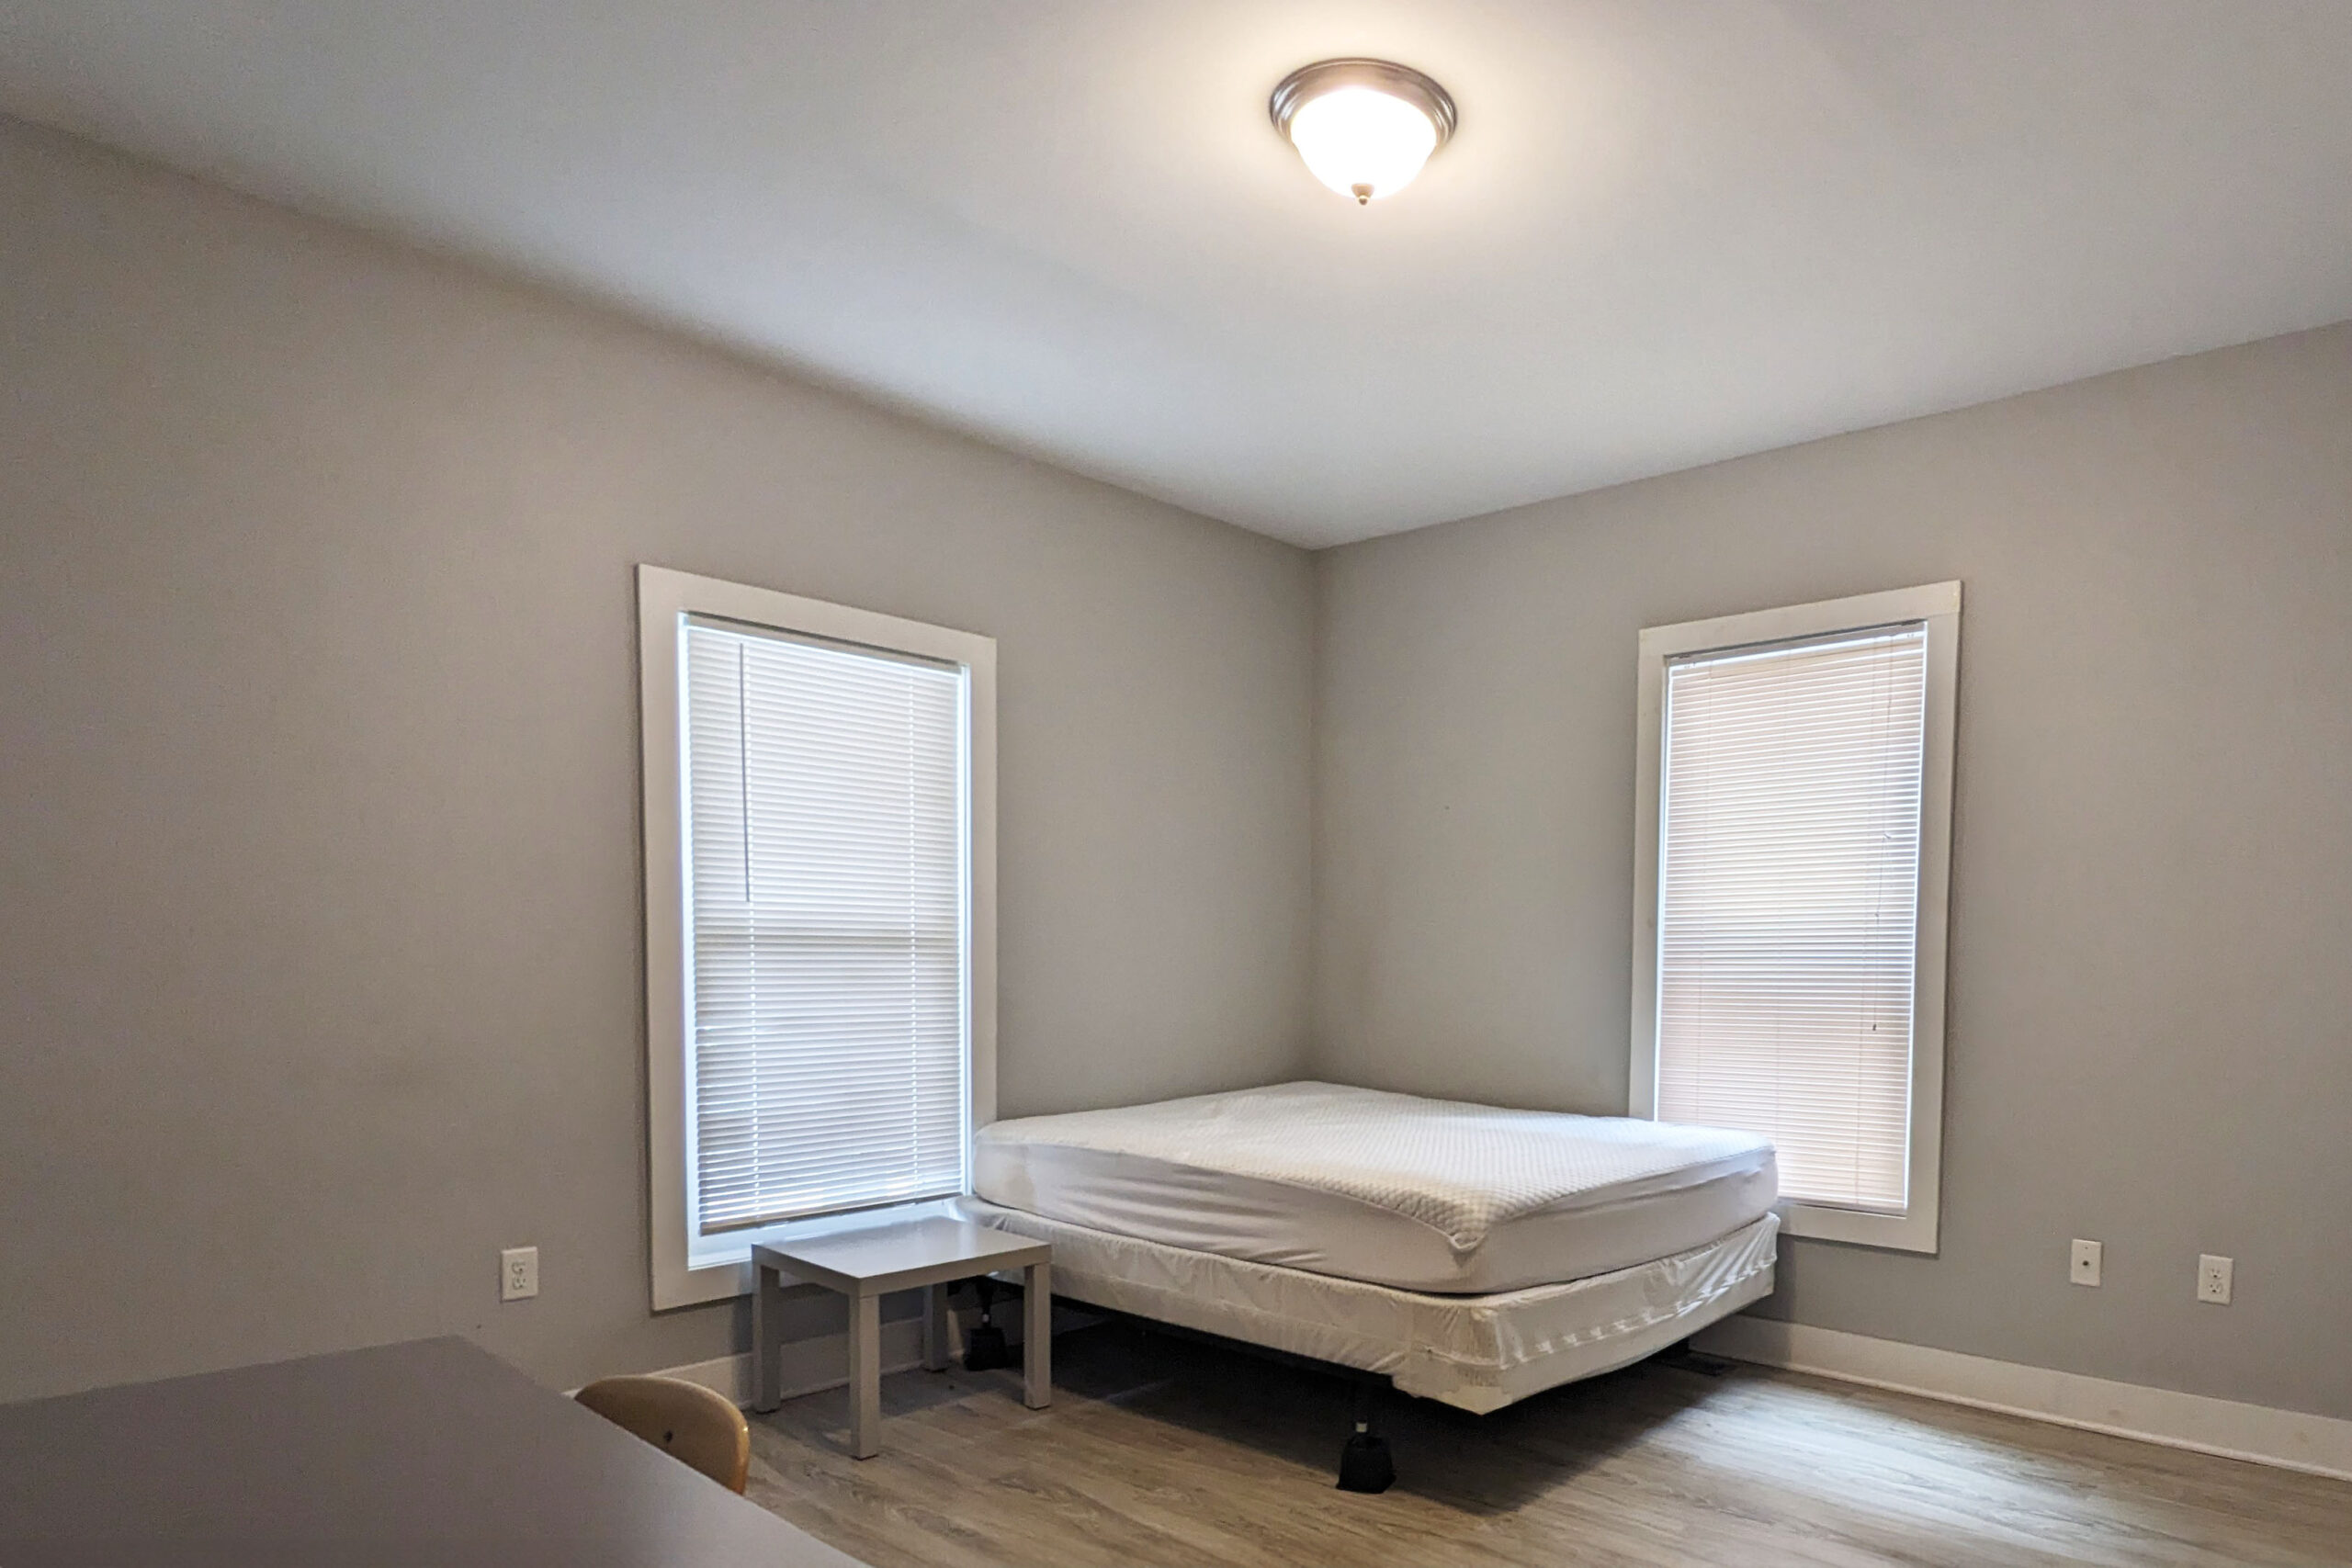 Bedroom at 109 Frank St.